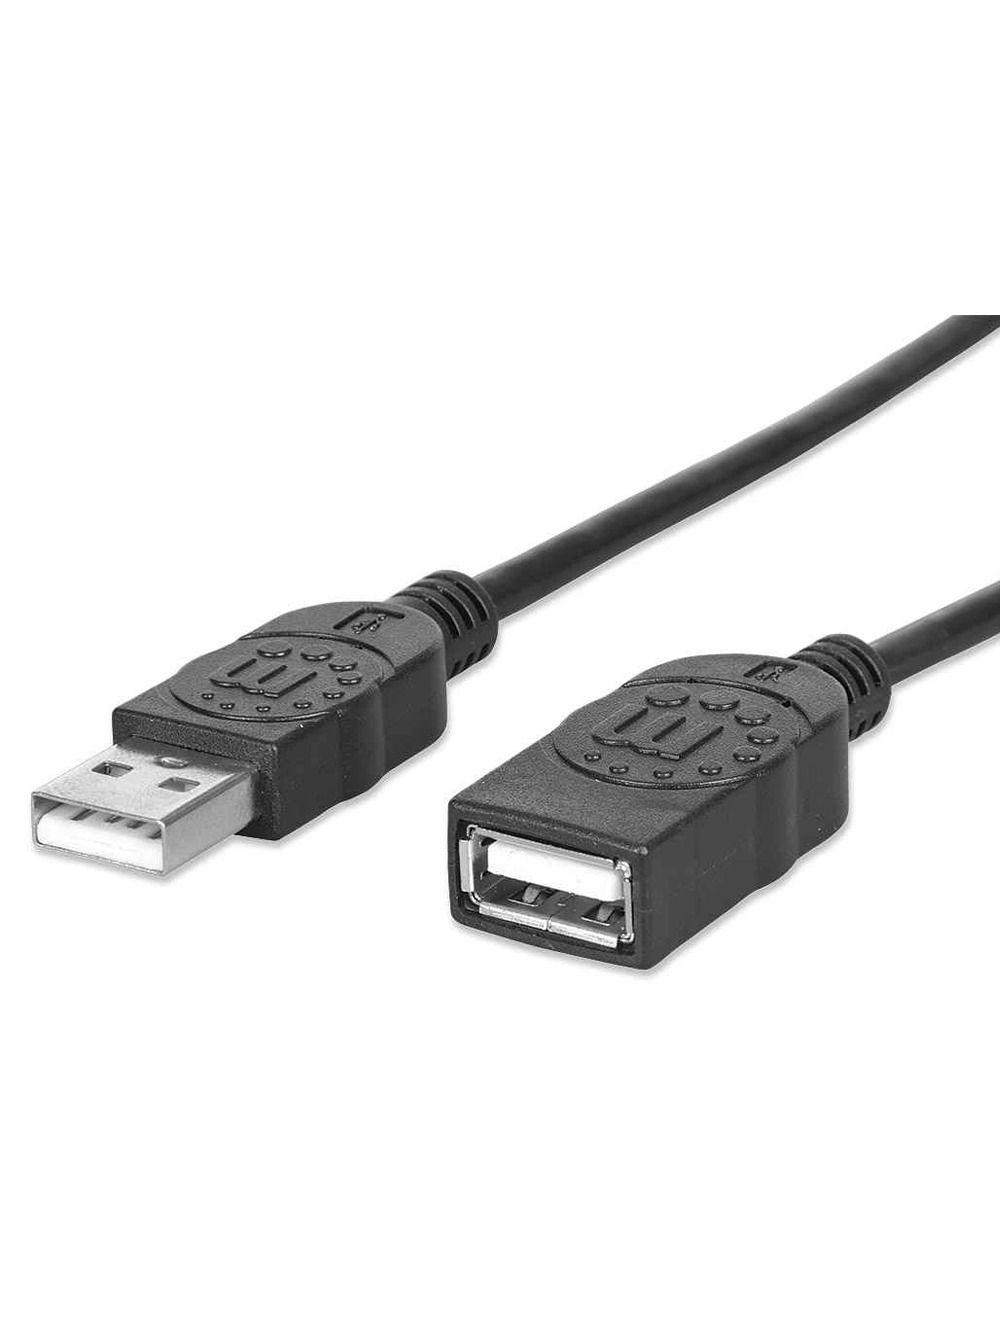 352710 Manhattan USB Cable 